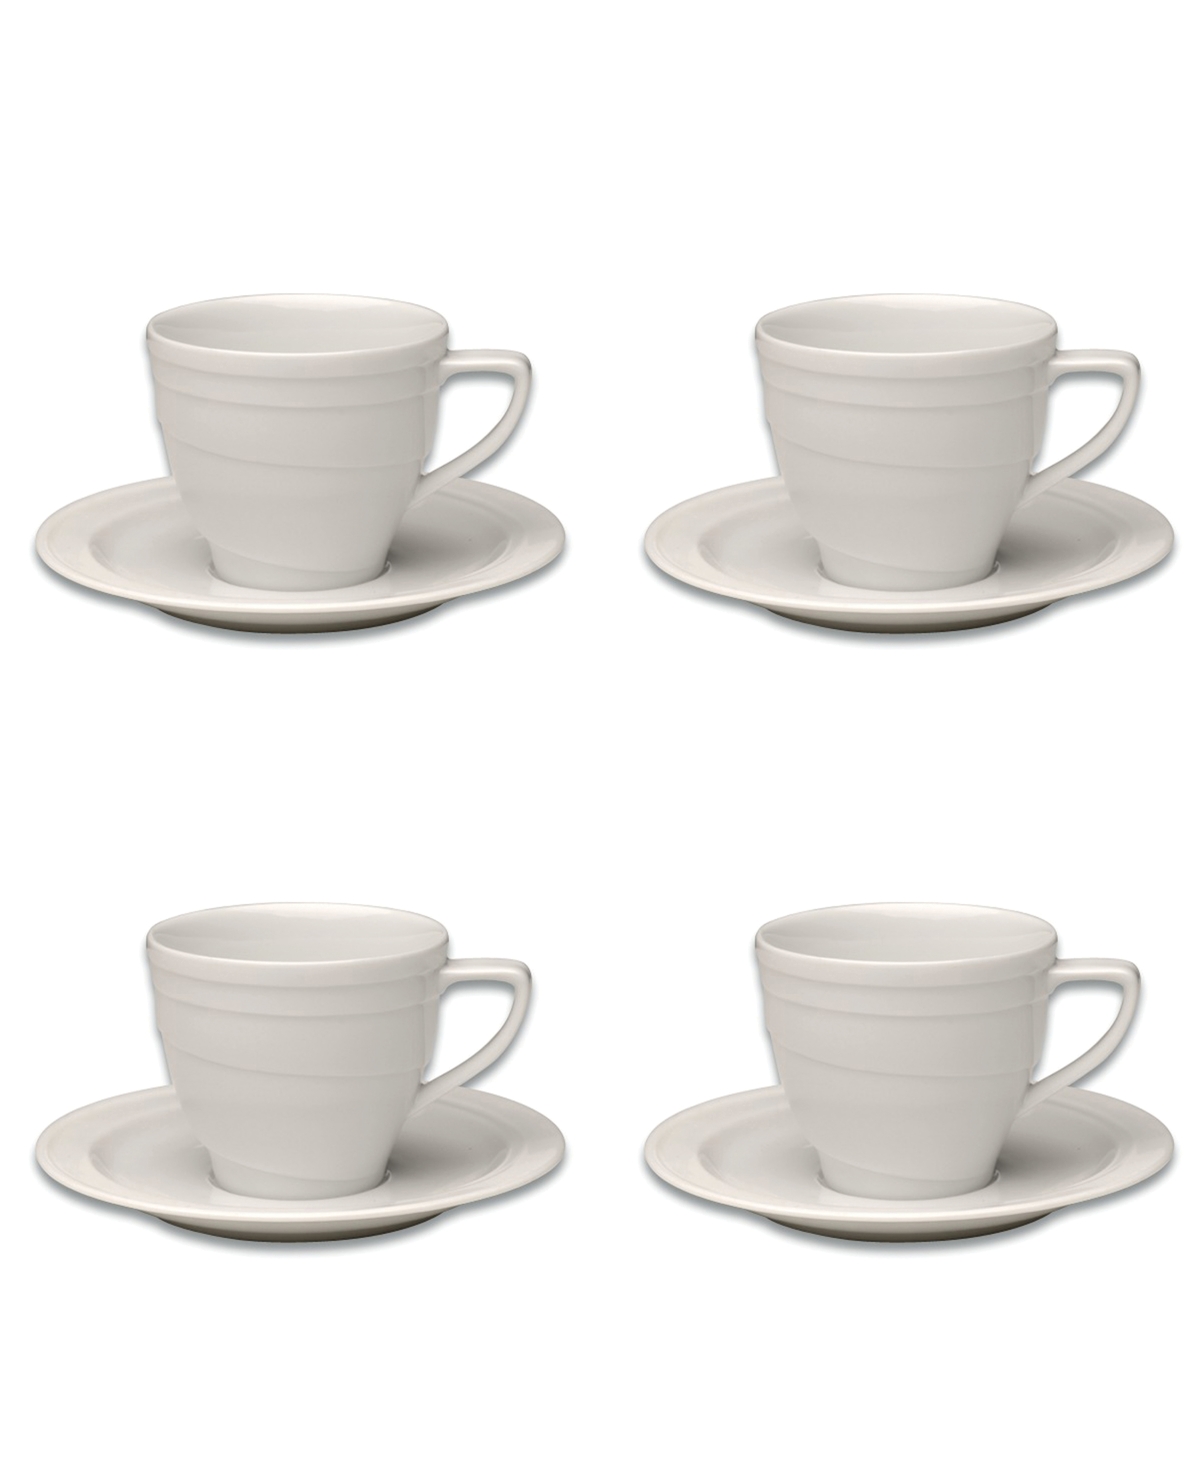 Essentials 4 Oz Porcelain Cup Saucer, Set of 4 - White